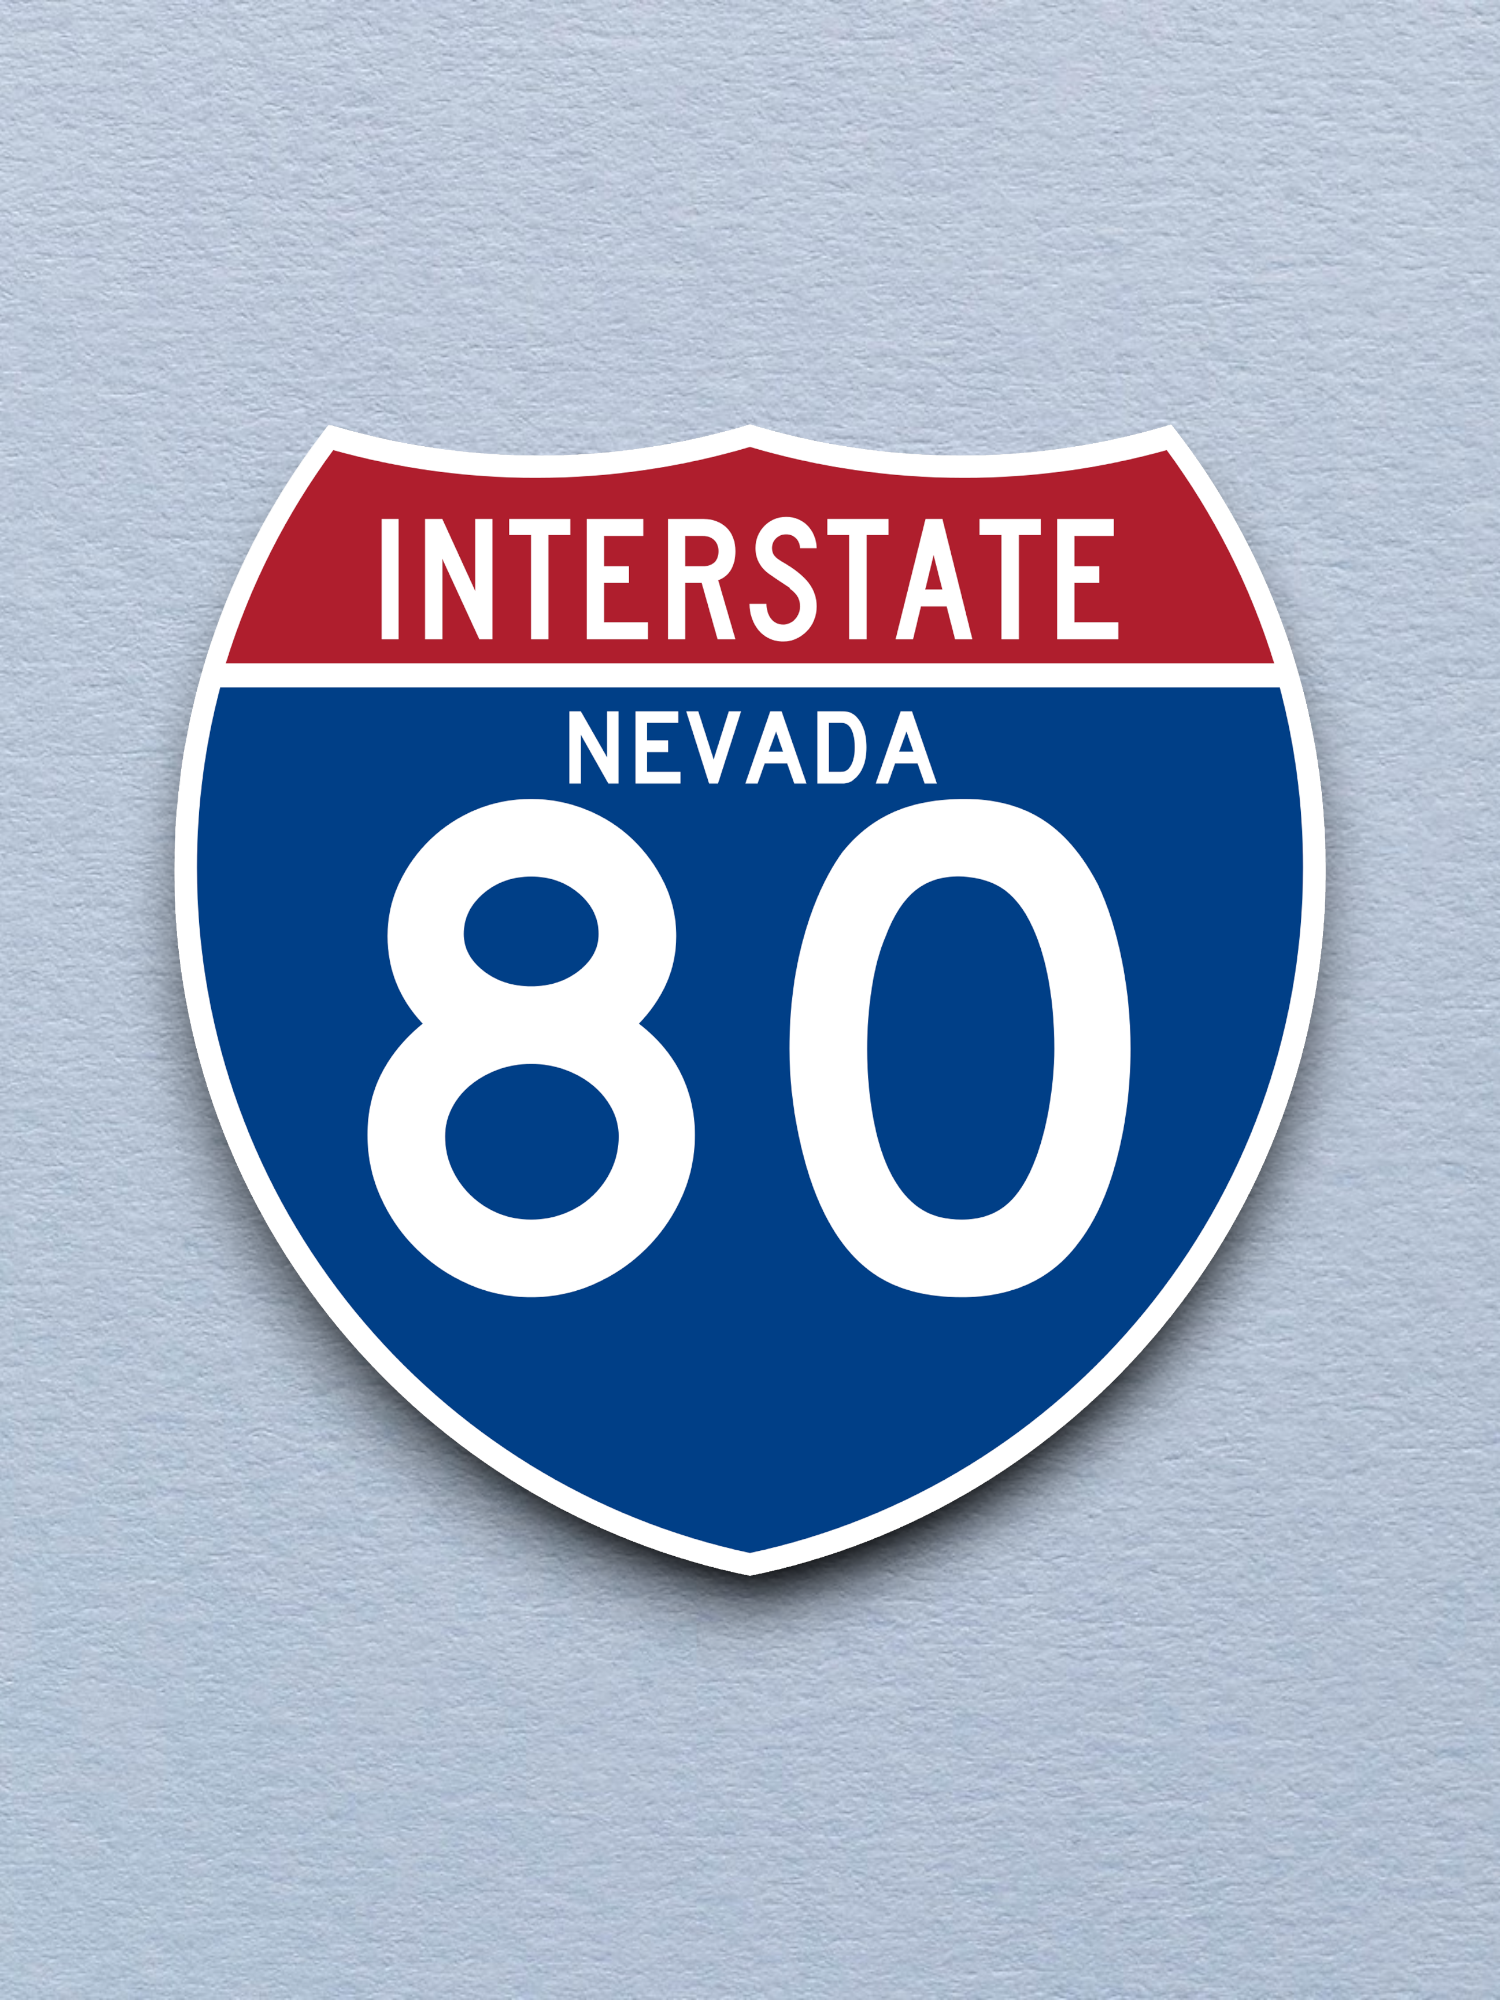 Interstate I-80 - Nevada - Road Sign Sticker